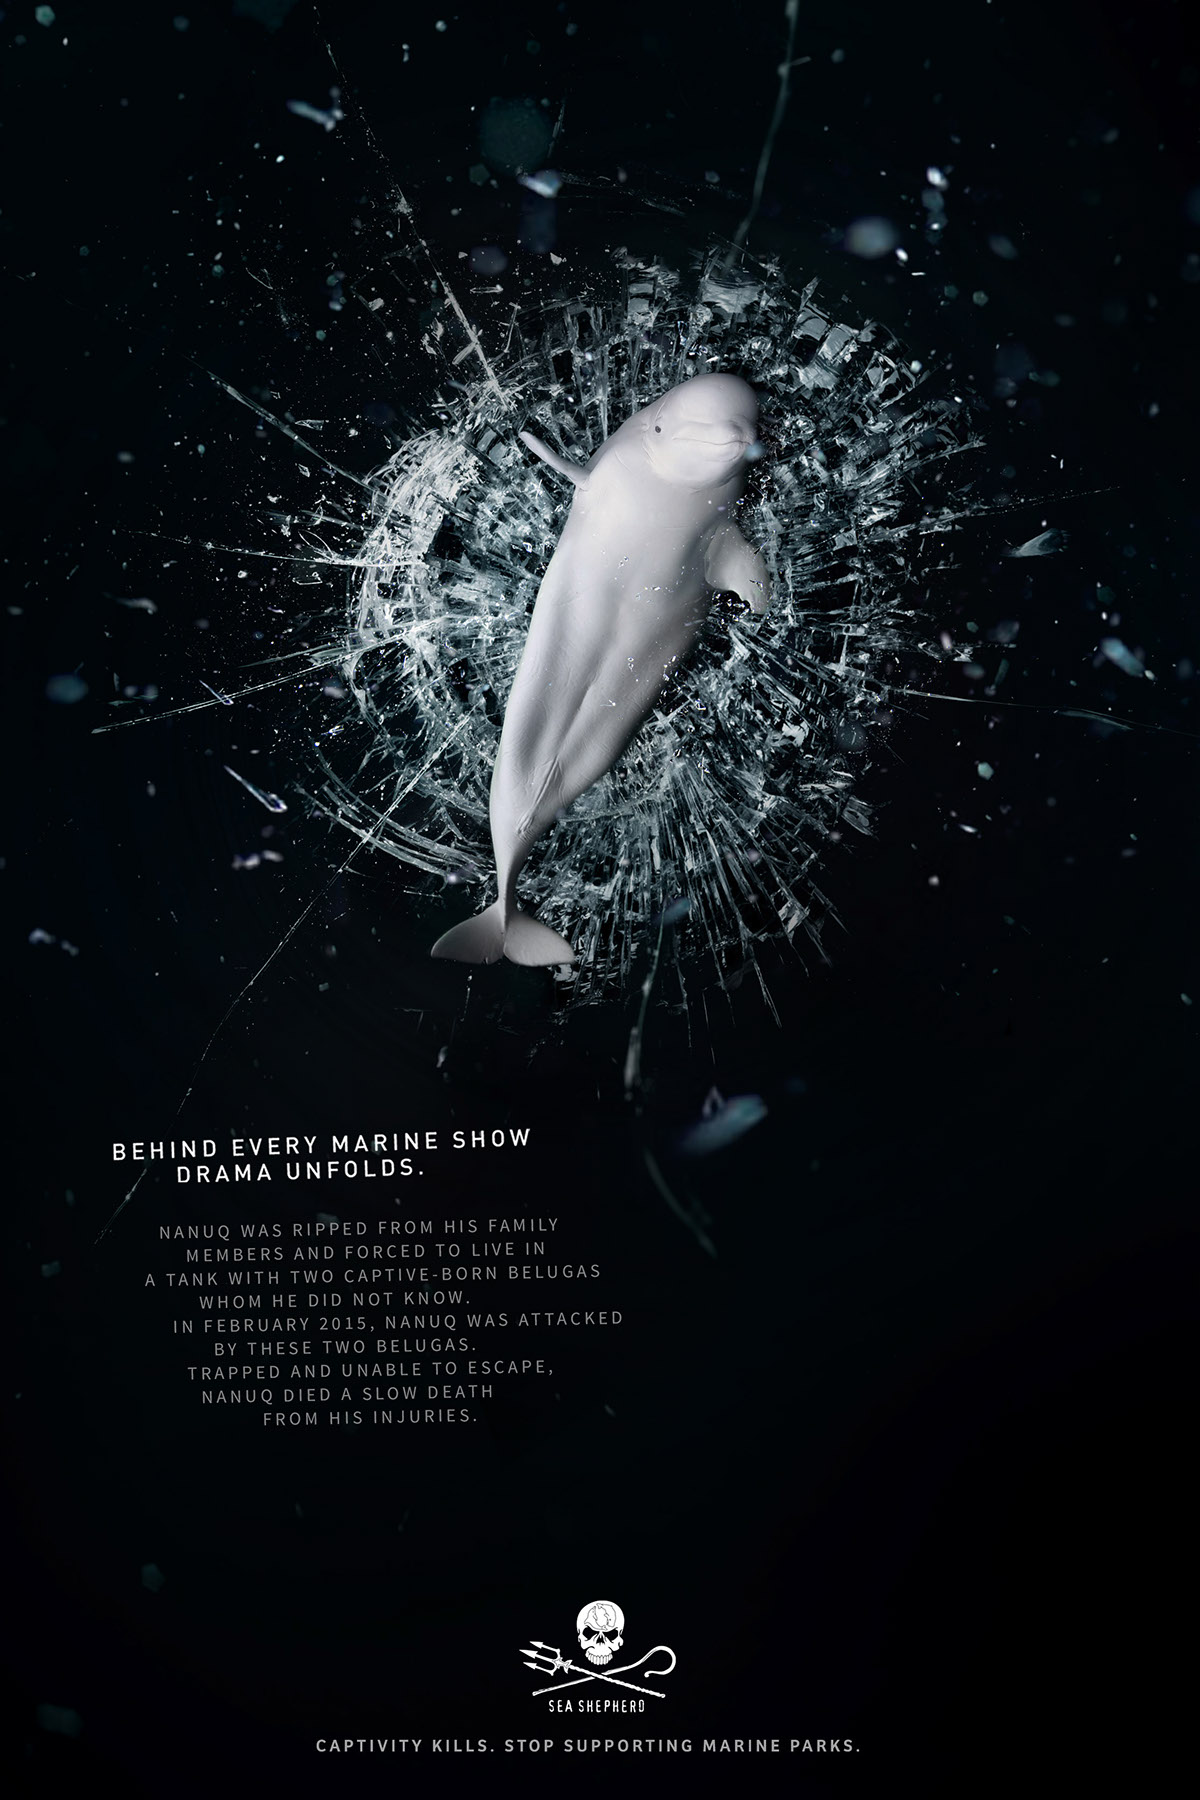 Captivity seashepherd Advertising  kill dolphin whales Ocean sea world marine